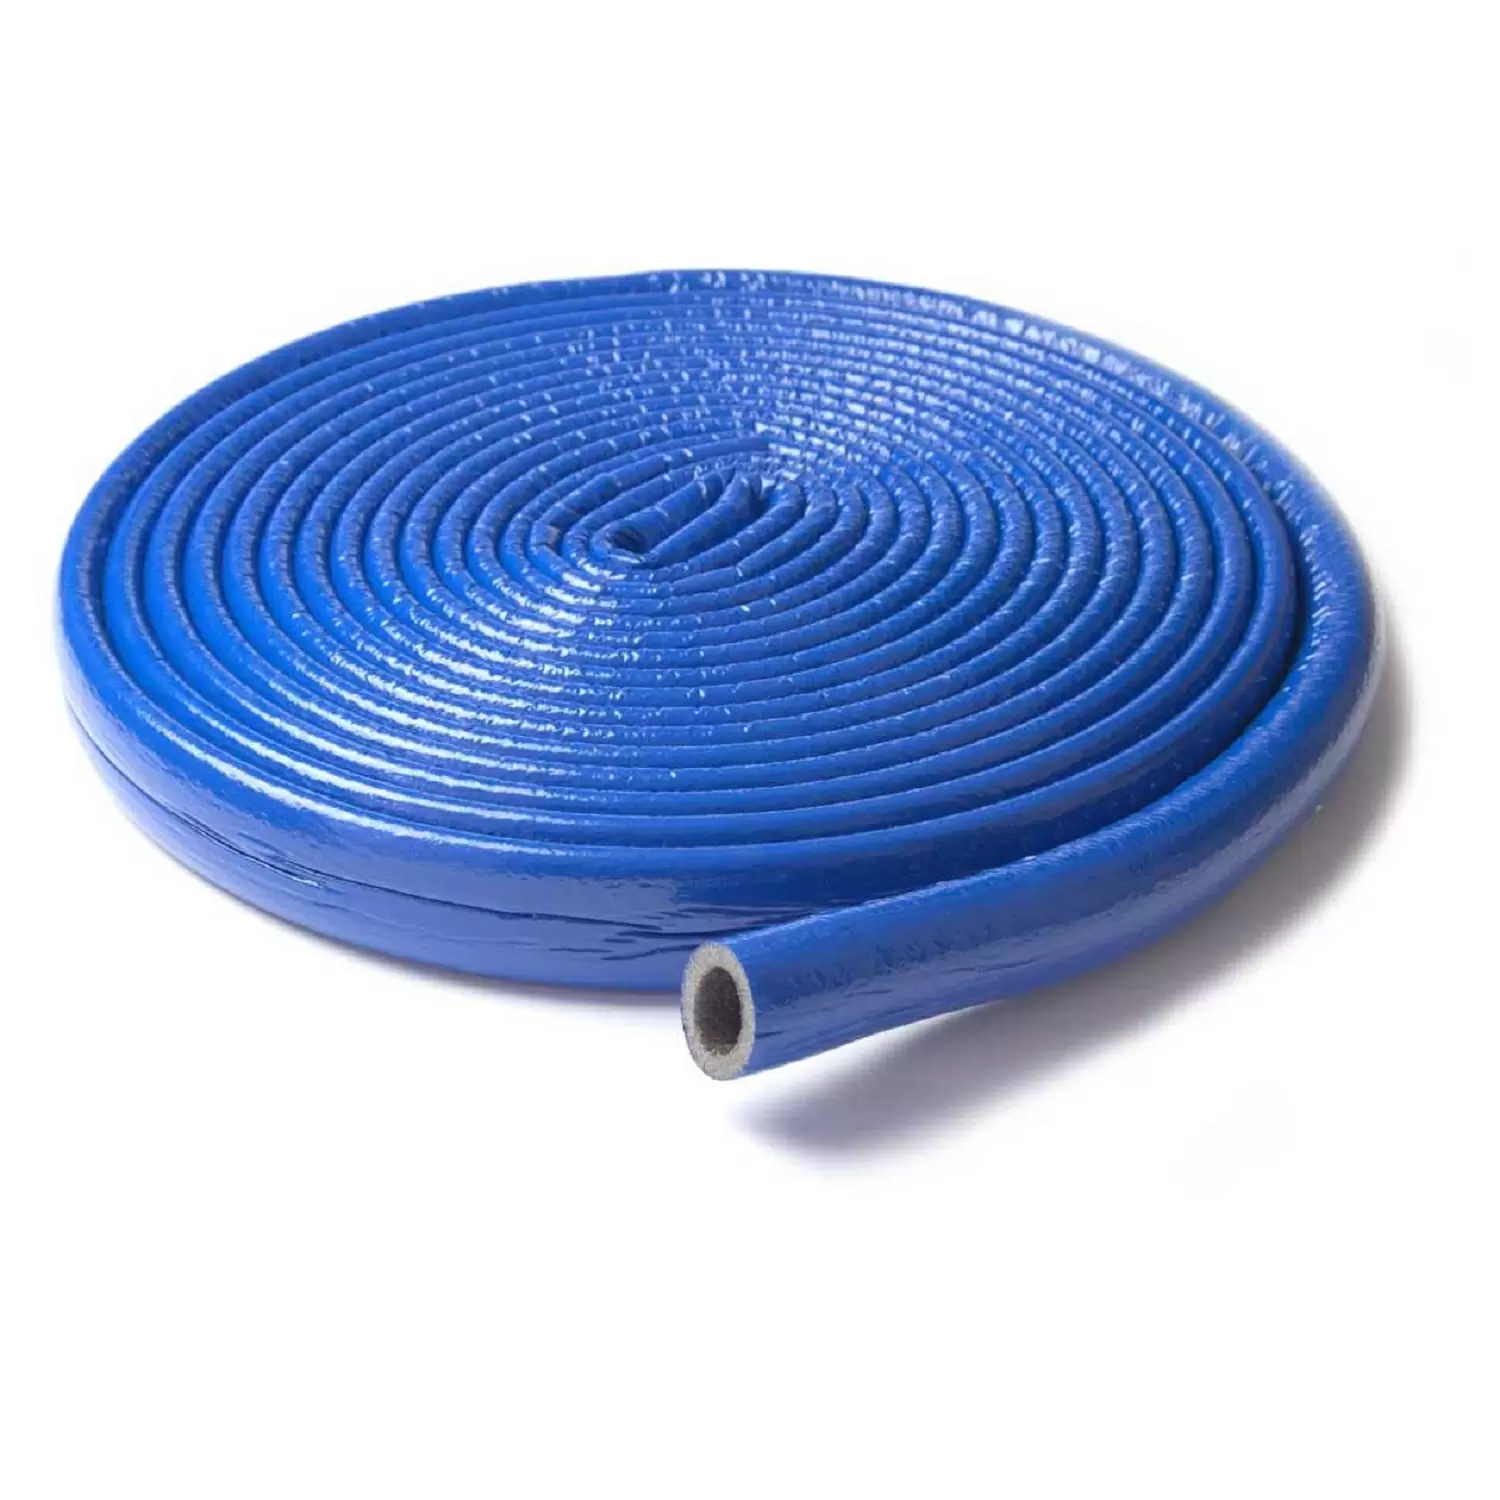 Теплоизоляция Энергофлекс супер протект 22/4 для труб диаметром 20 мм синяя, бухта 11 м